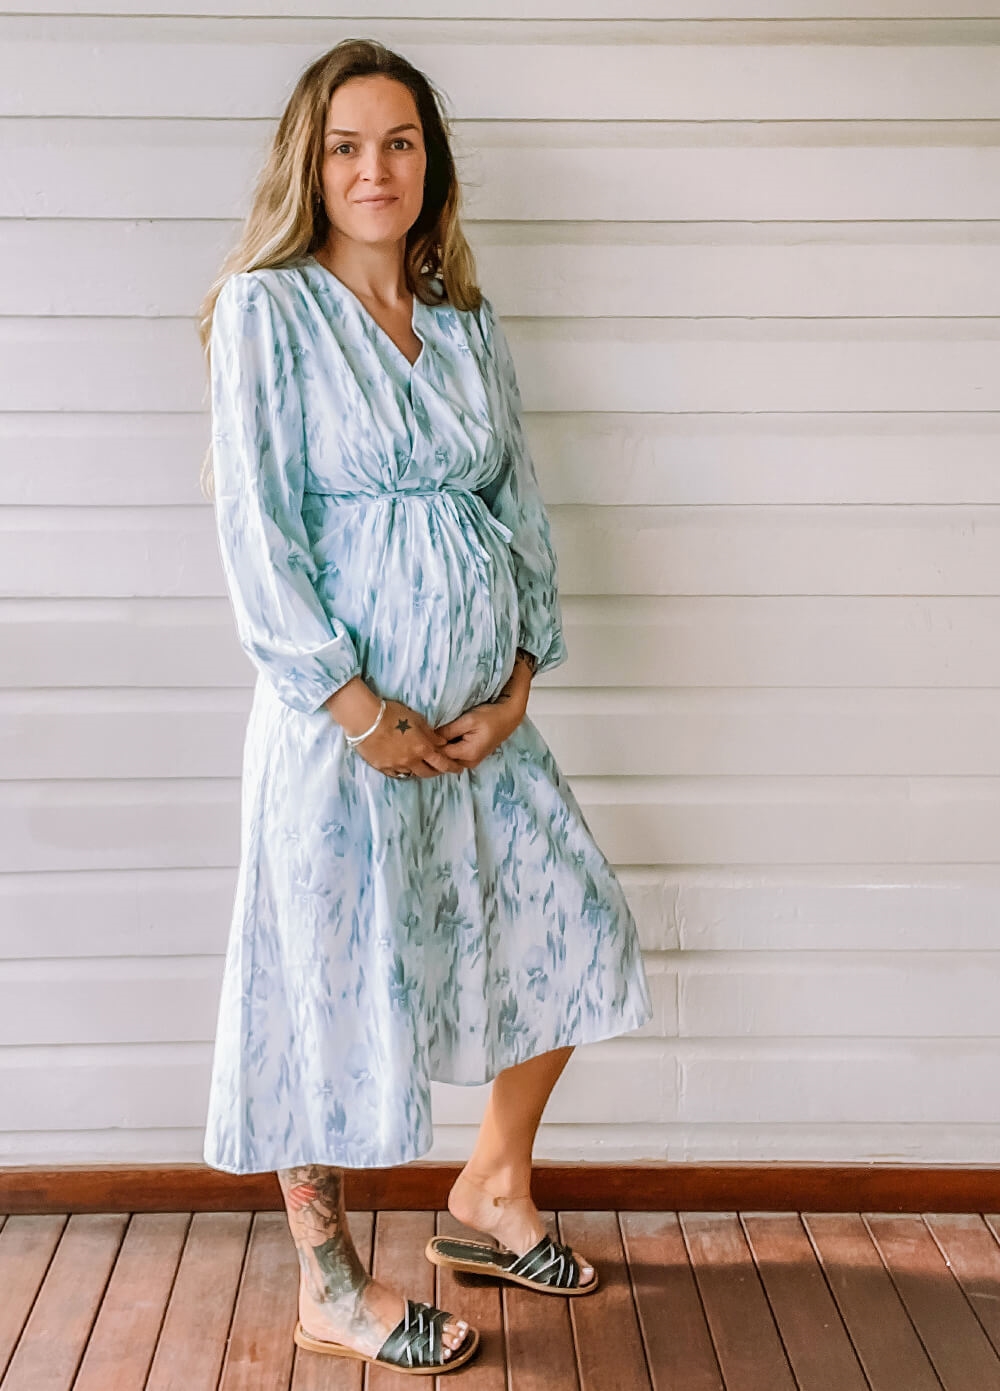 Lait & Co - Evie Maternity Midi Dress in Blue Floral